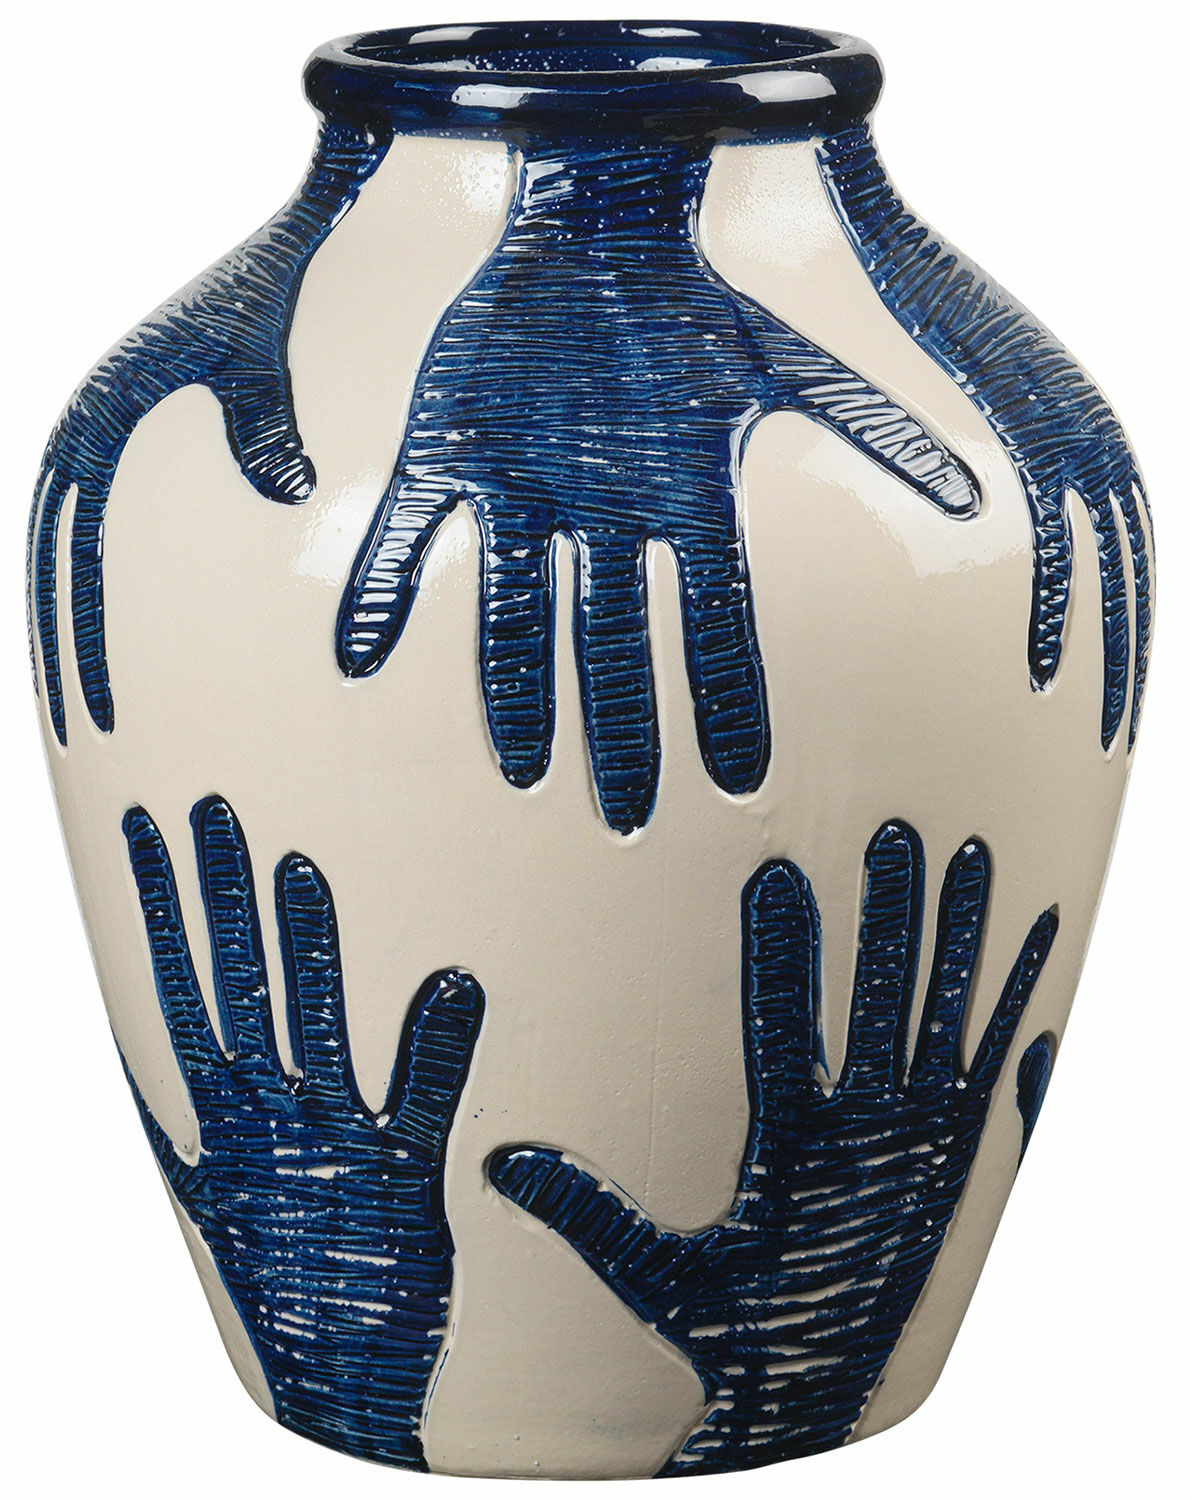 Ceramic vase "Mime" by Broste Copenhagen